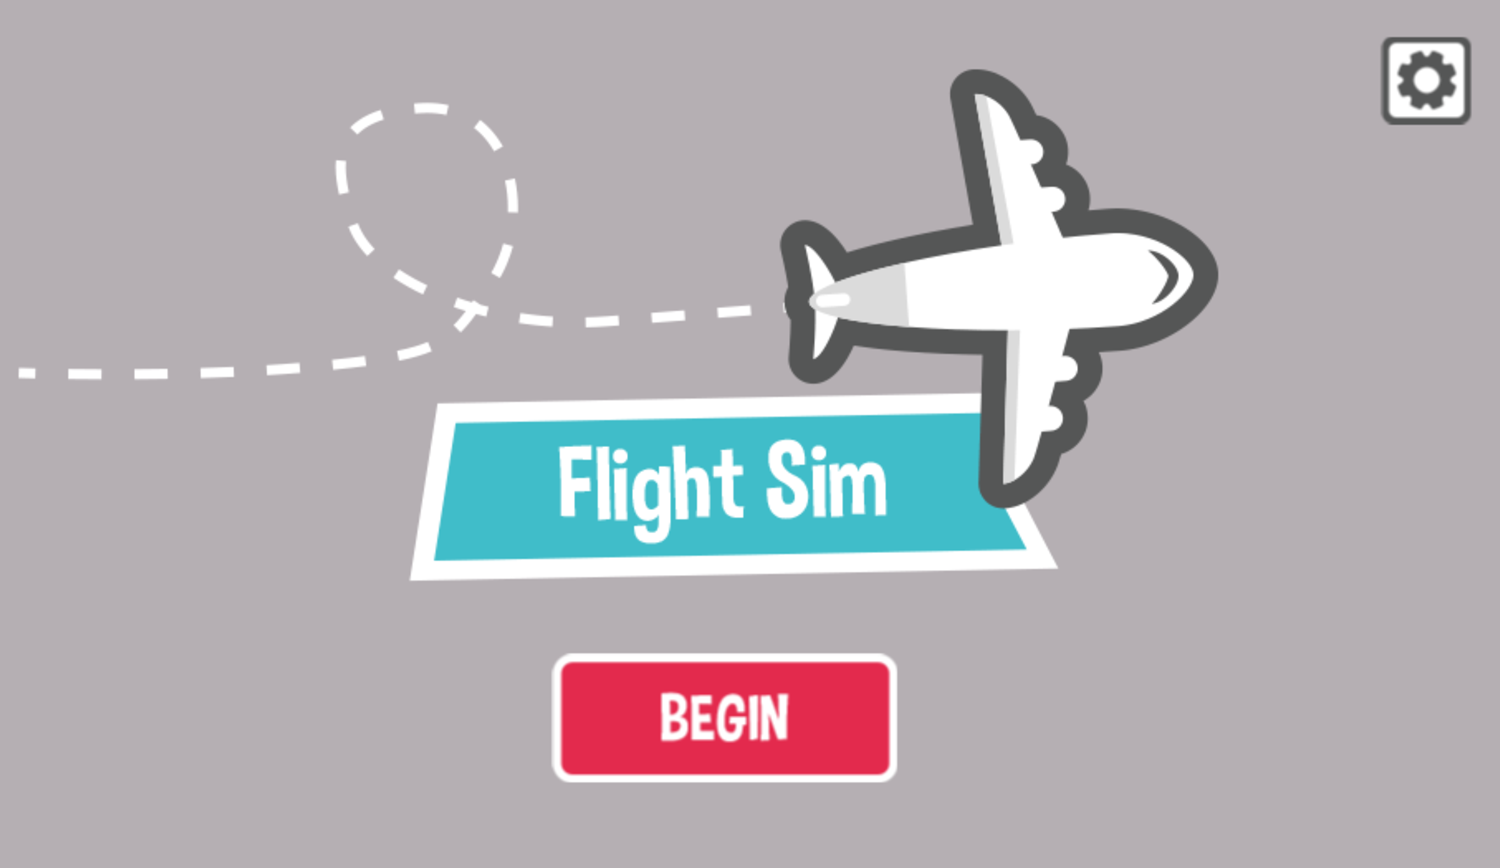 Flight Sim Game Welcome Screenshot.